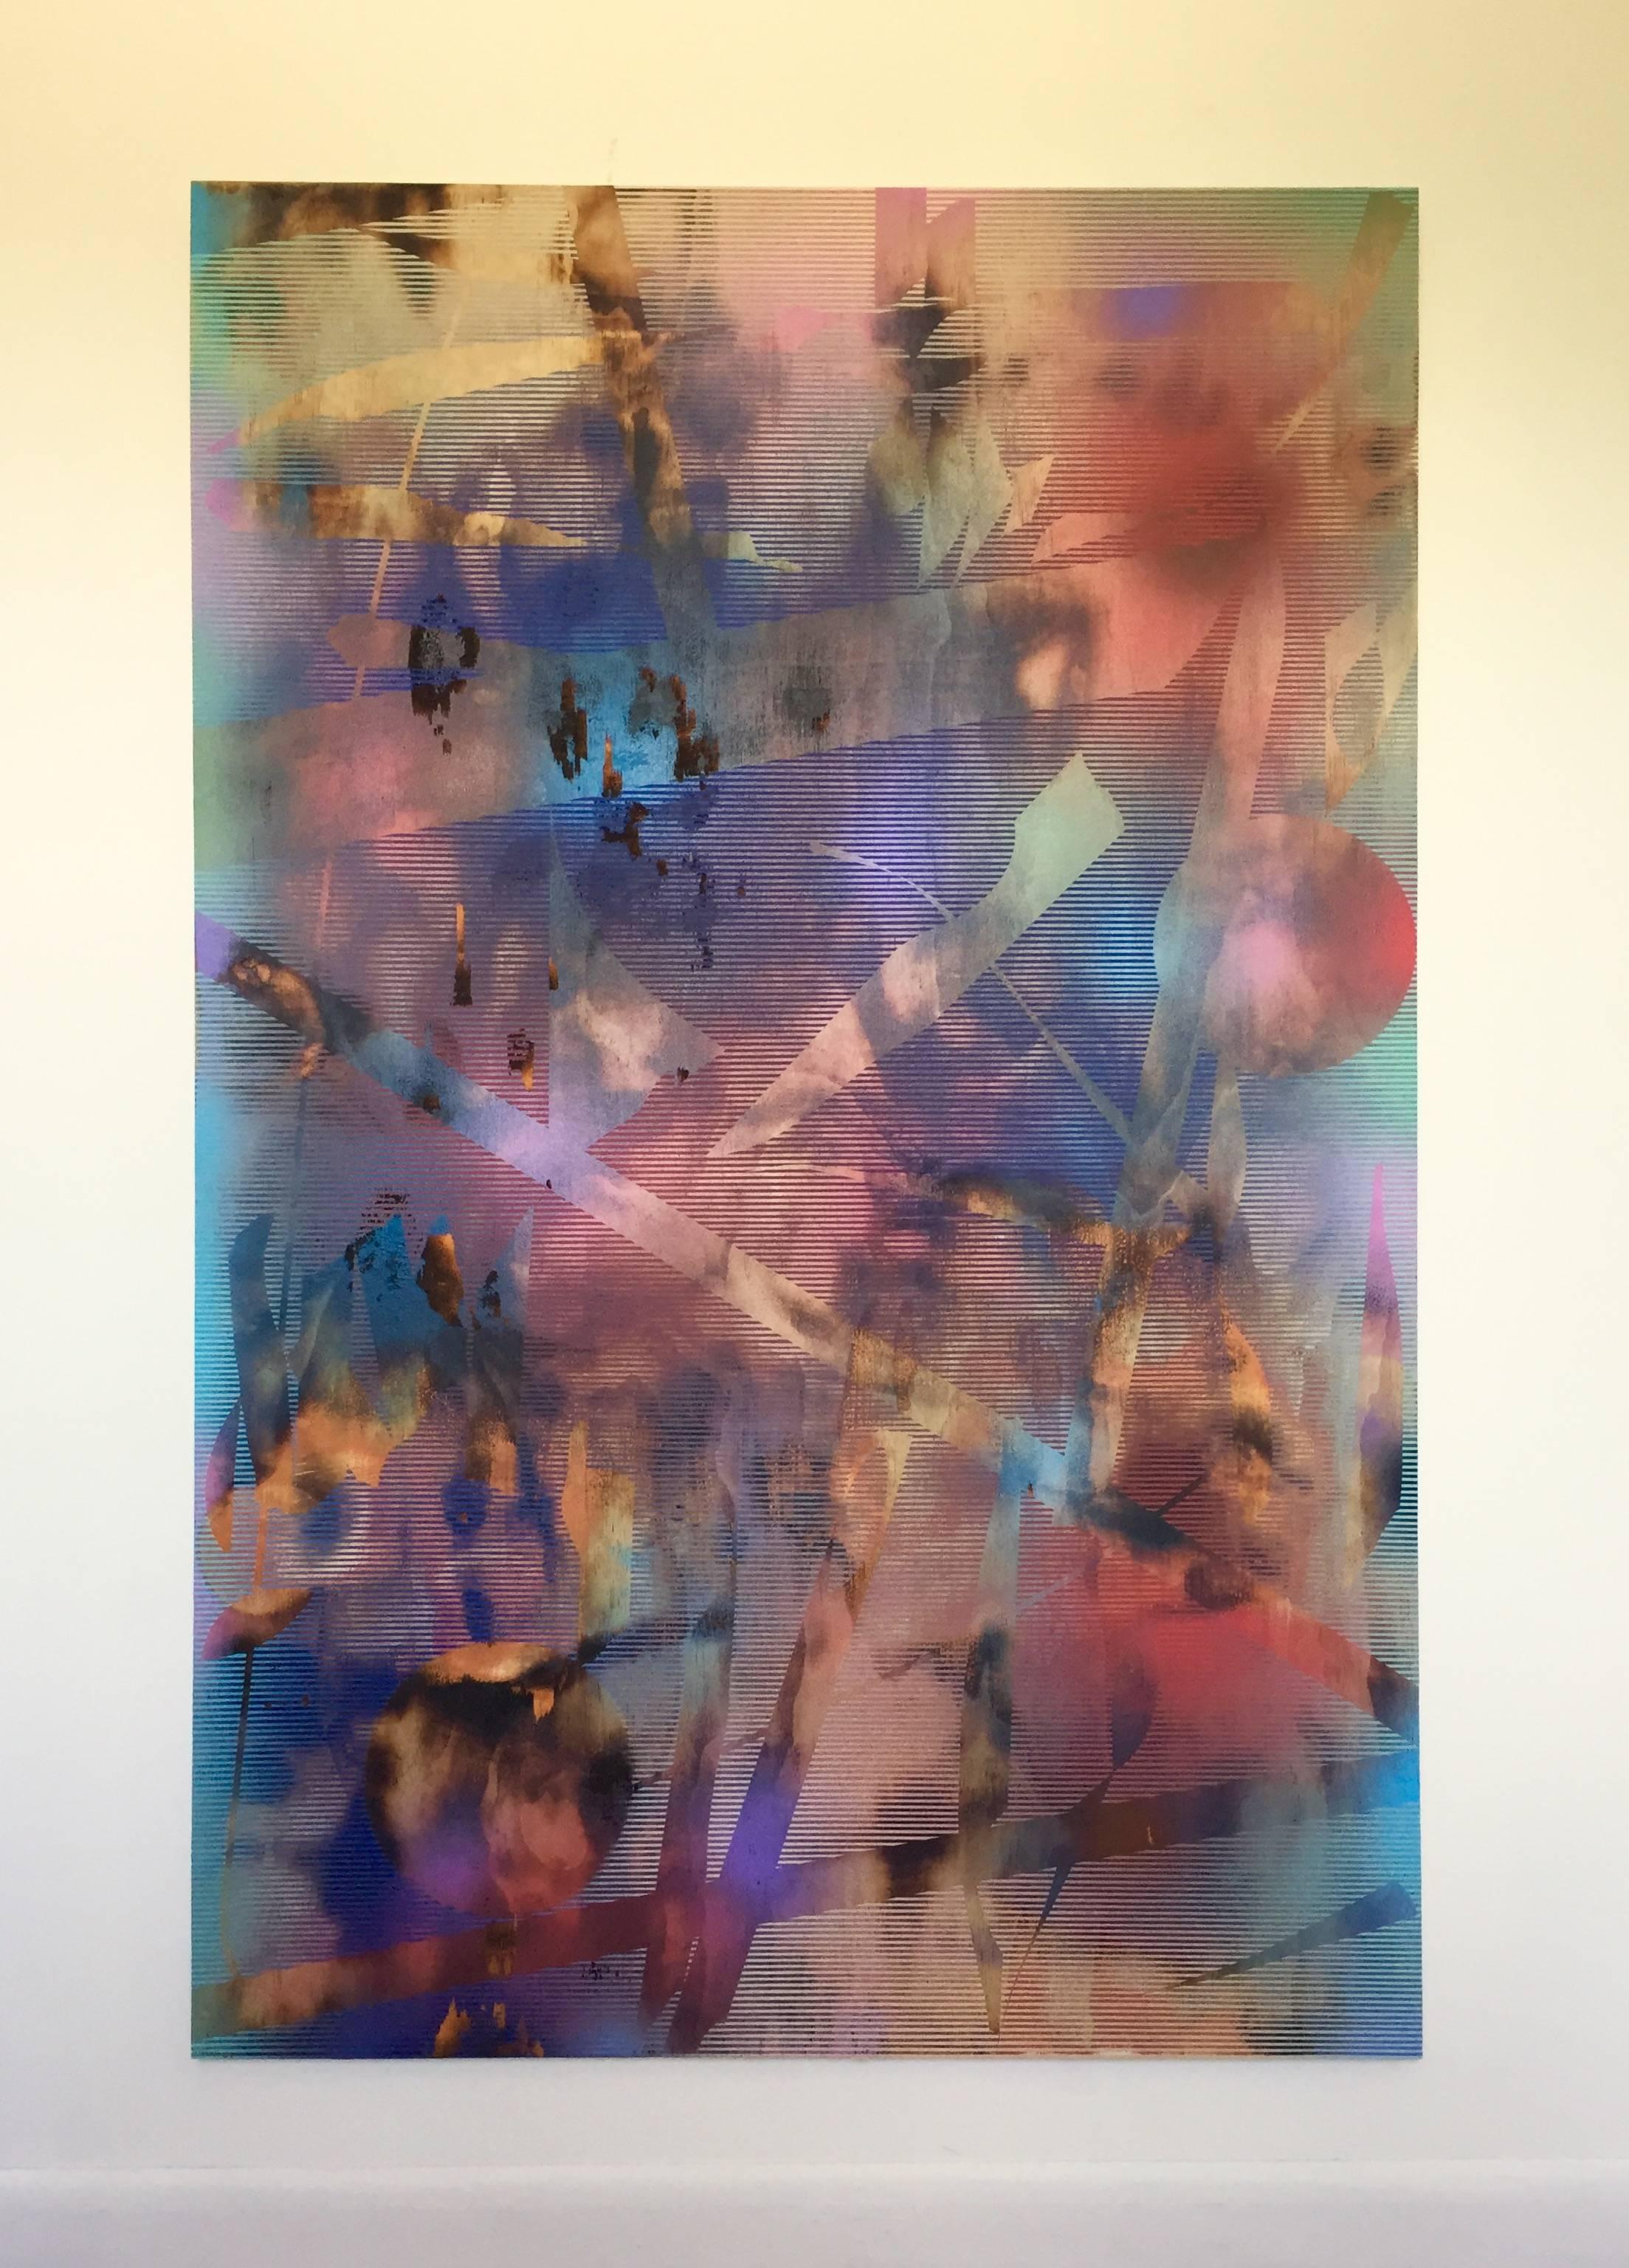 Turbulence 22 (grid painting abstraktes Holz zeitgenössisches farbenfrohes, lebendiges, großes  (Abstrakter Expressionismus), Mixed Media Art, von Melisa Taylor Metzger